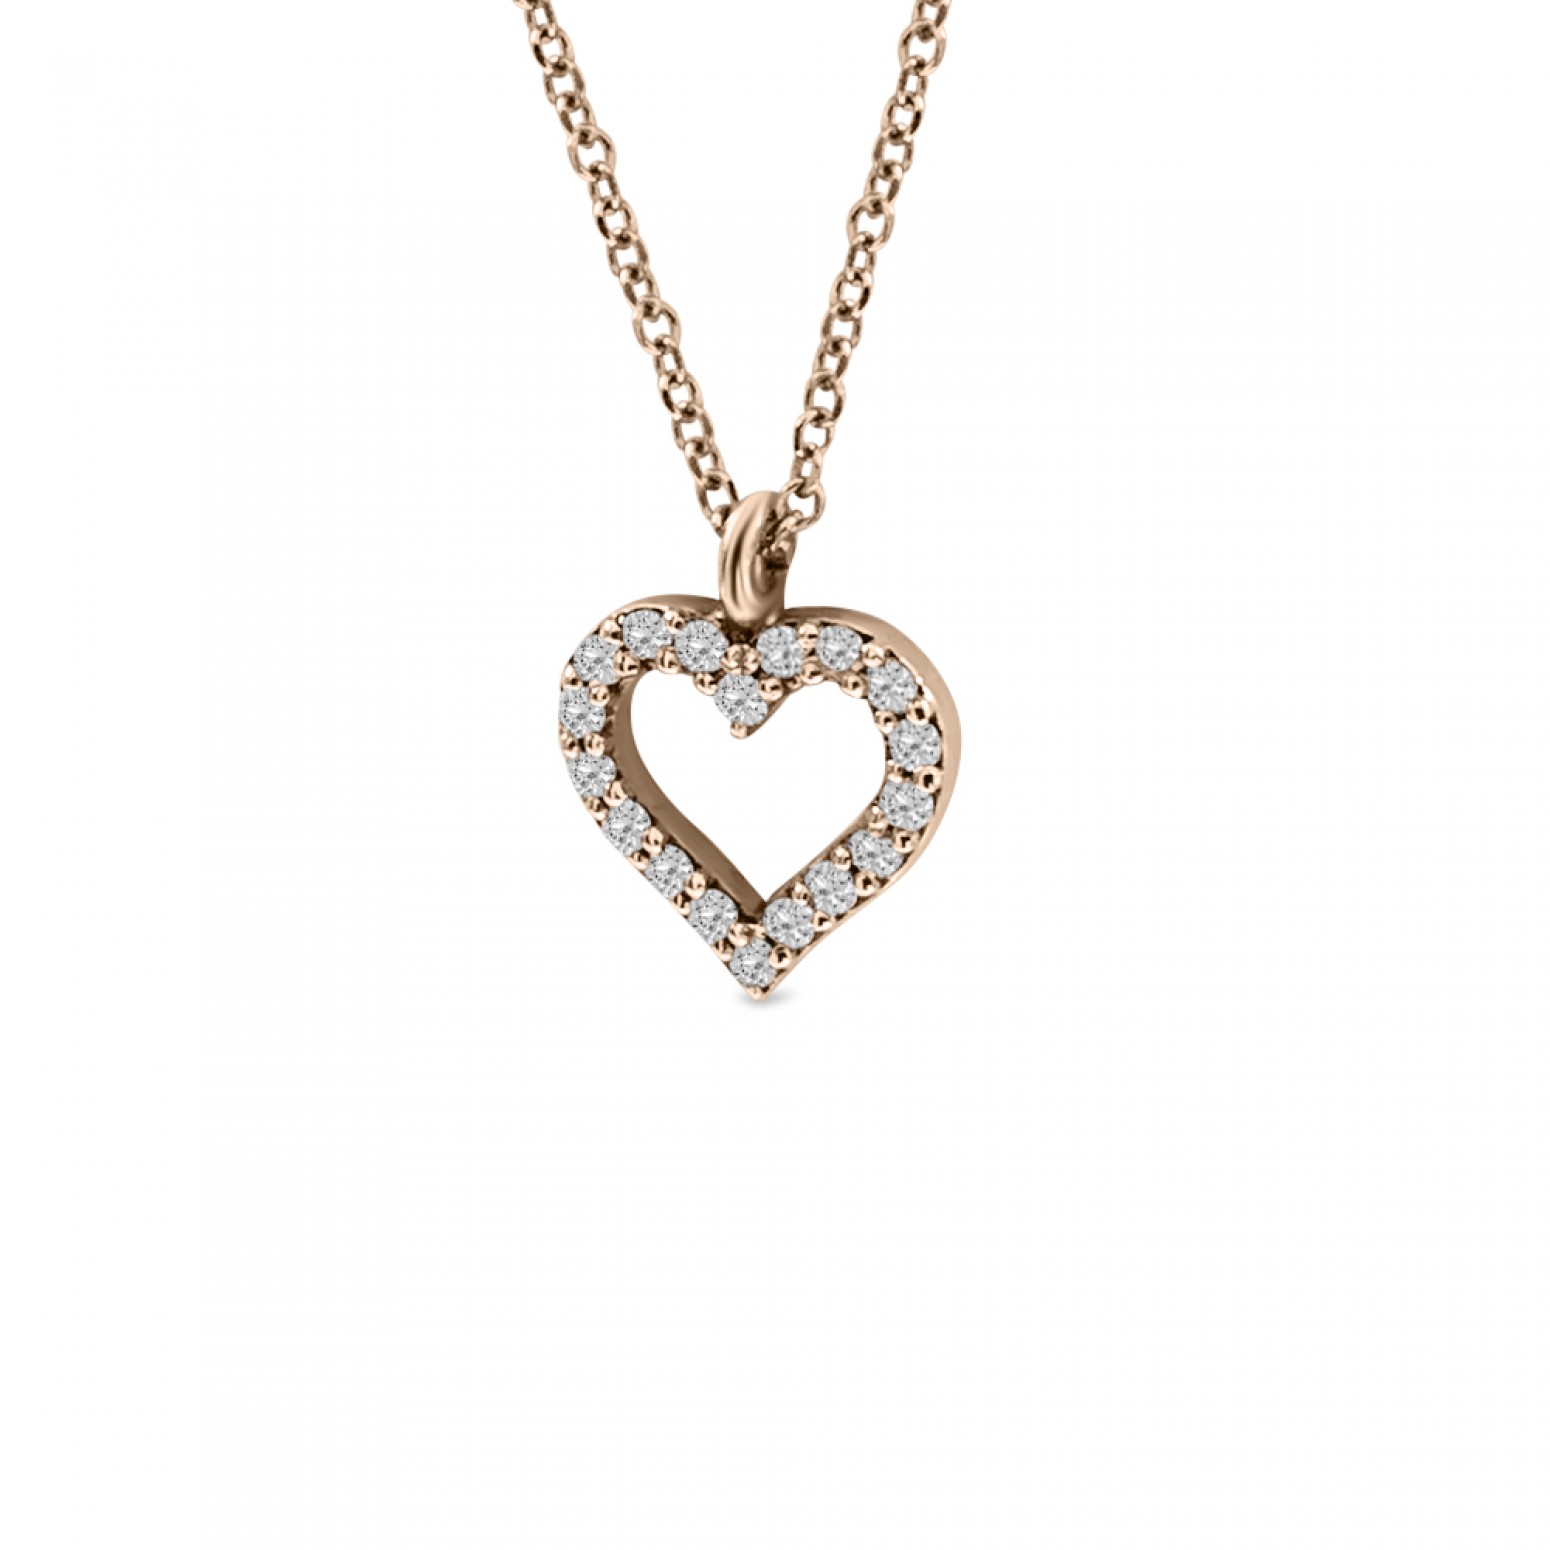 Heart necklace, Κ18 pink gold with diamonds 0.09ct, VS2, H ko3988 NECKLACES Κοσμηματα - chrilia.gr